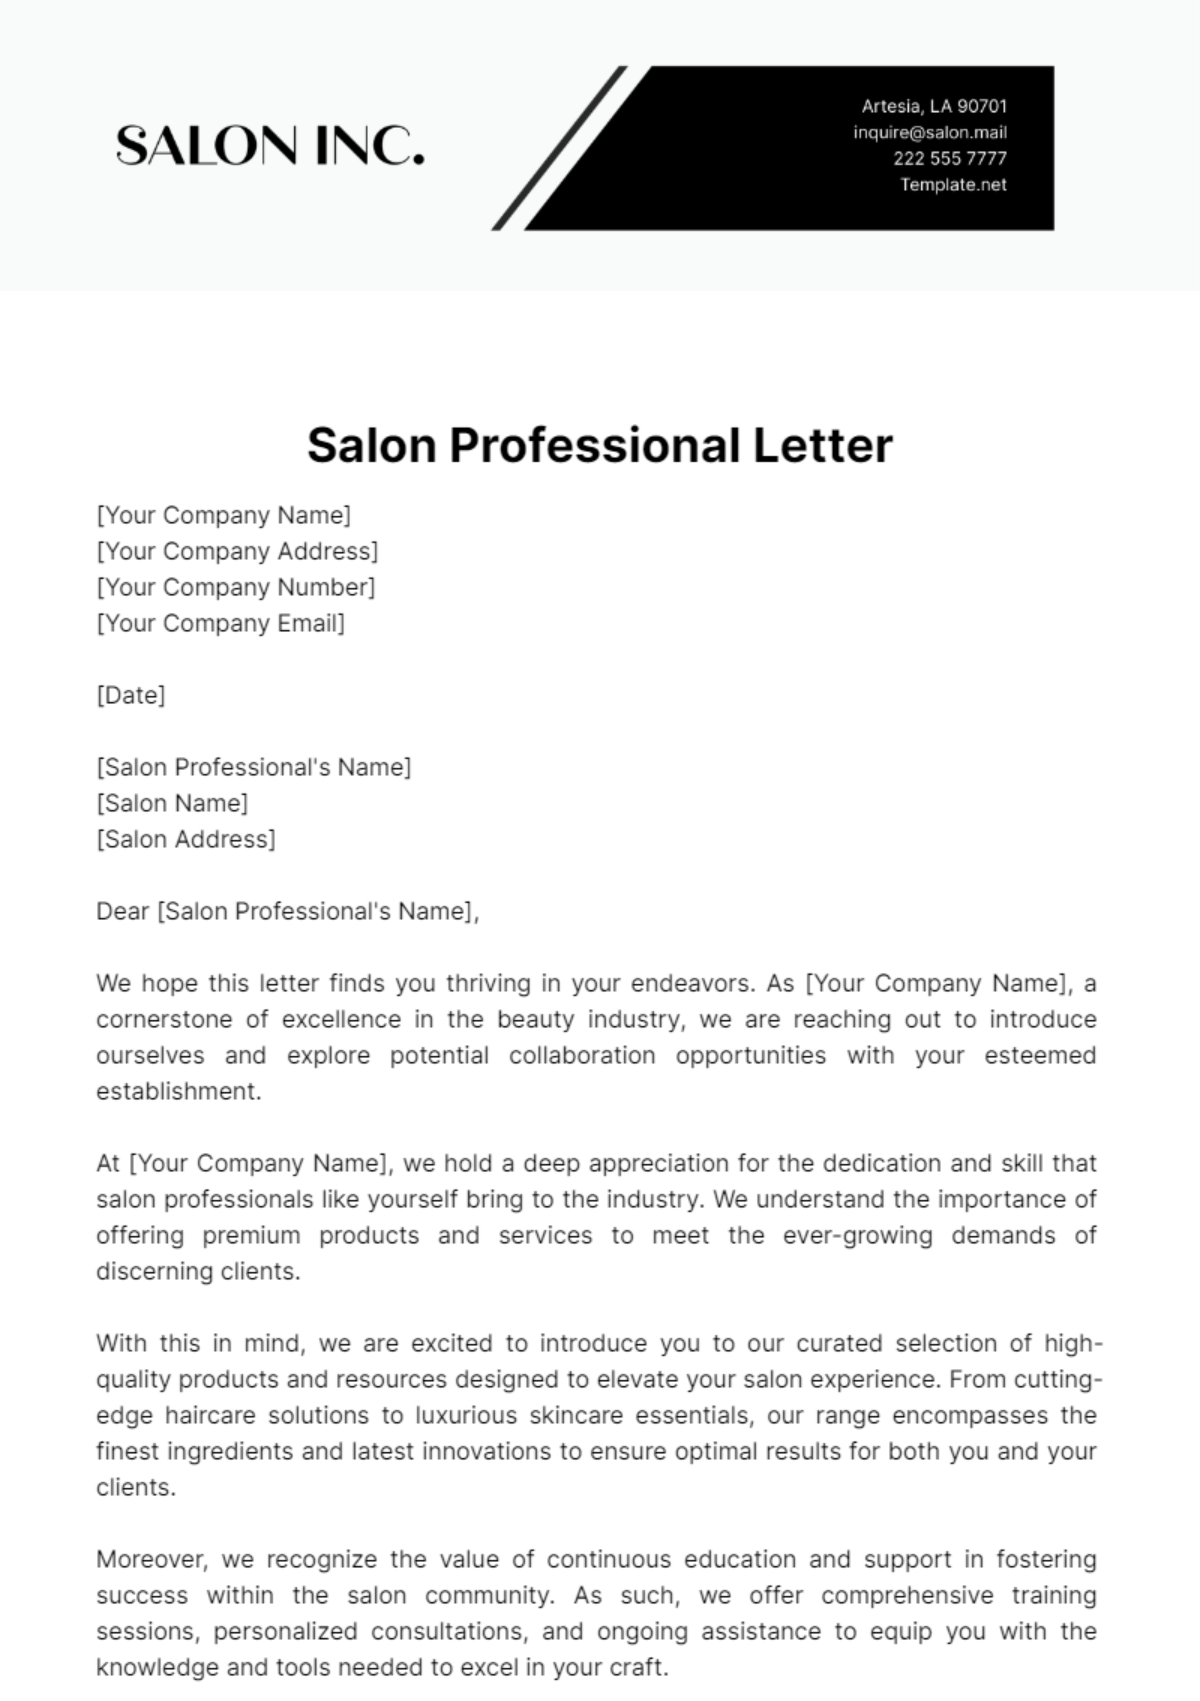 Free Salon Professional Letter Template